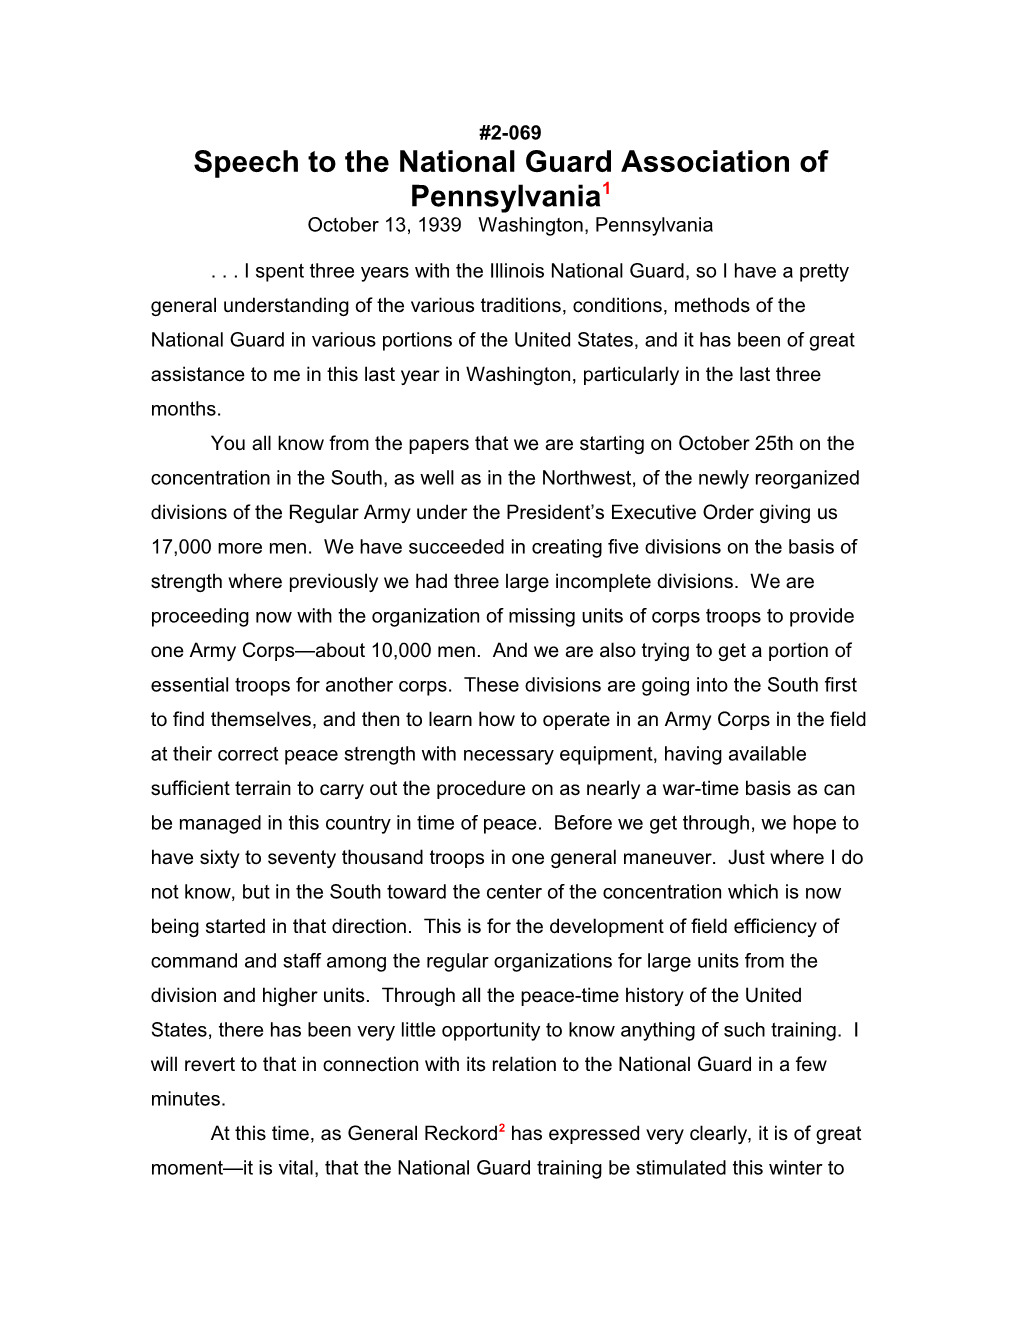 Speech to the National Guard Association of Pennsylvania1